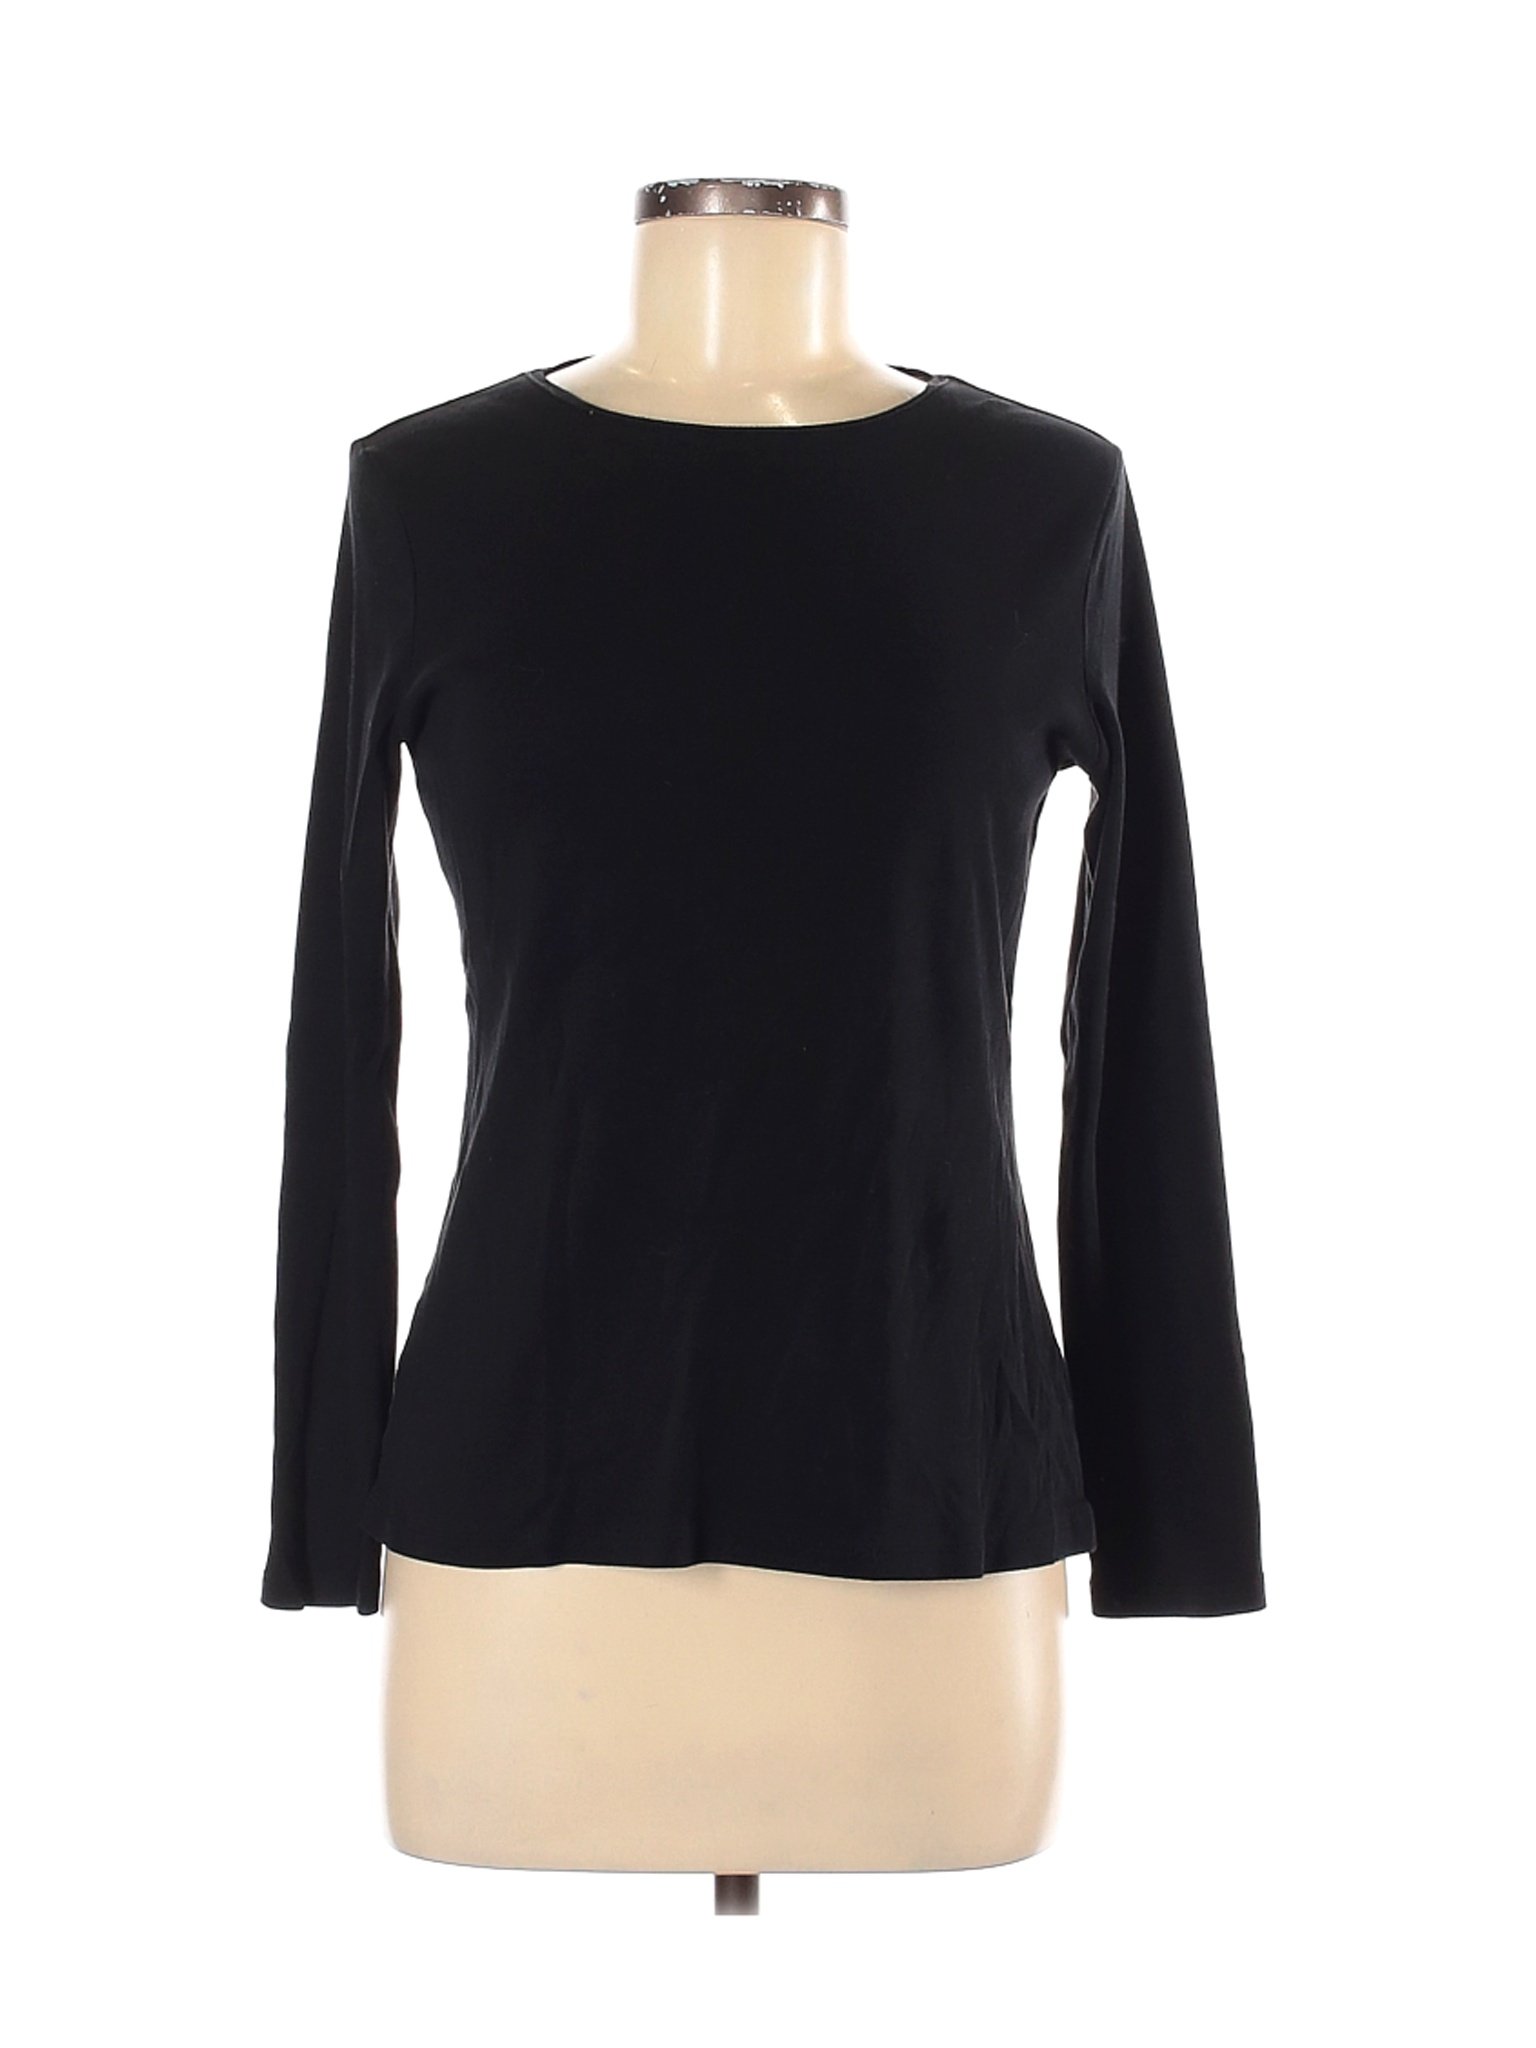 Talbots Women Black Long Sleeve T-Shirt M Petites | eBay